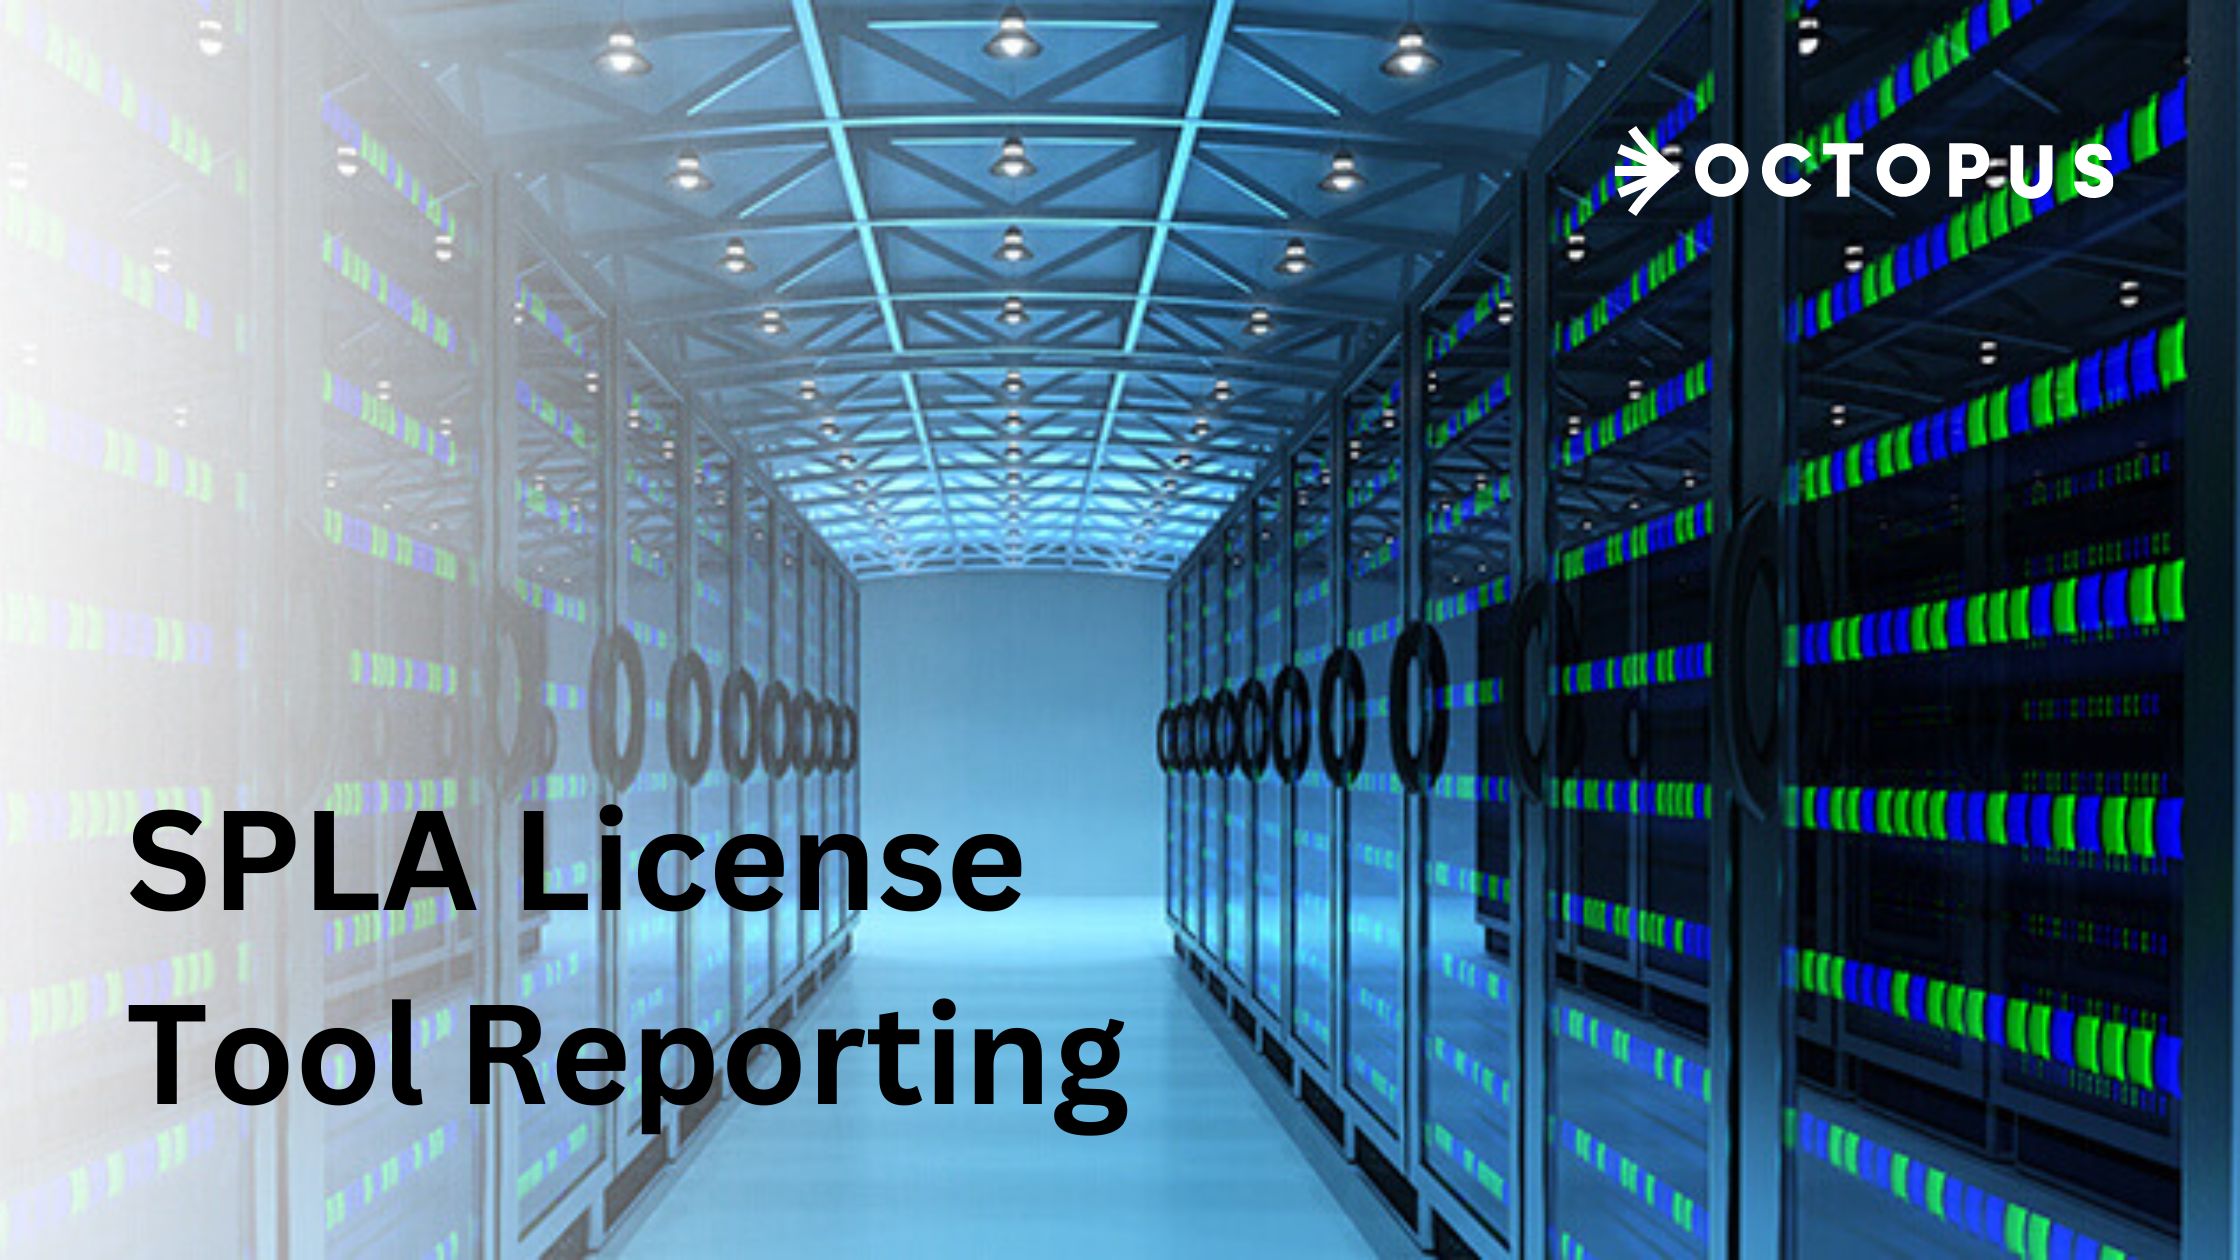 SPLA license tool reporting